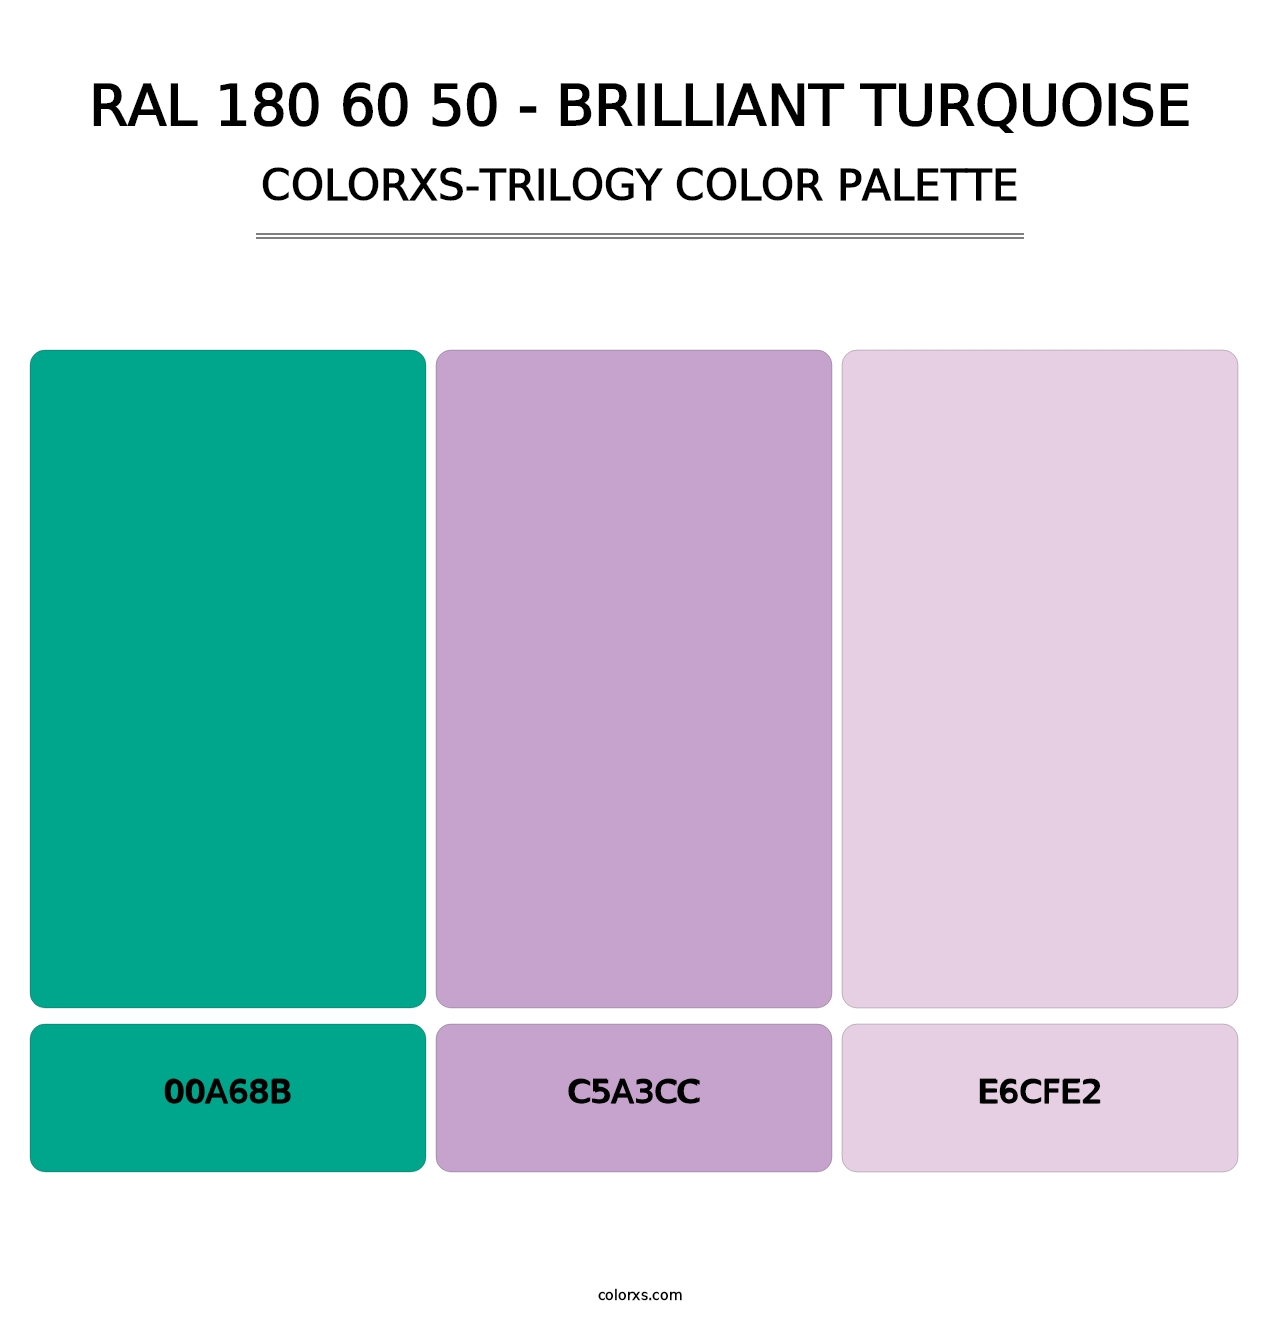 RAL 180 60 50 - Brilliant Turquoise - Colorxs Trilogy Palette